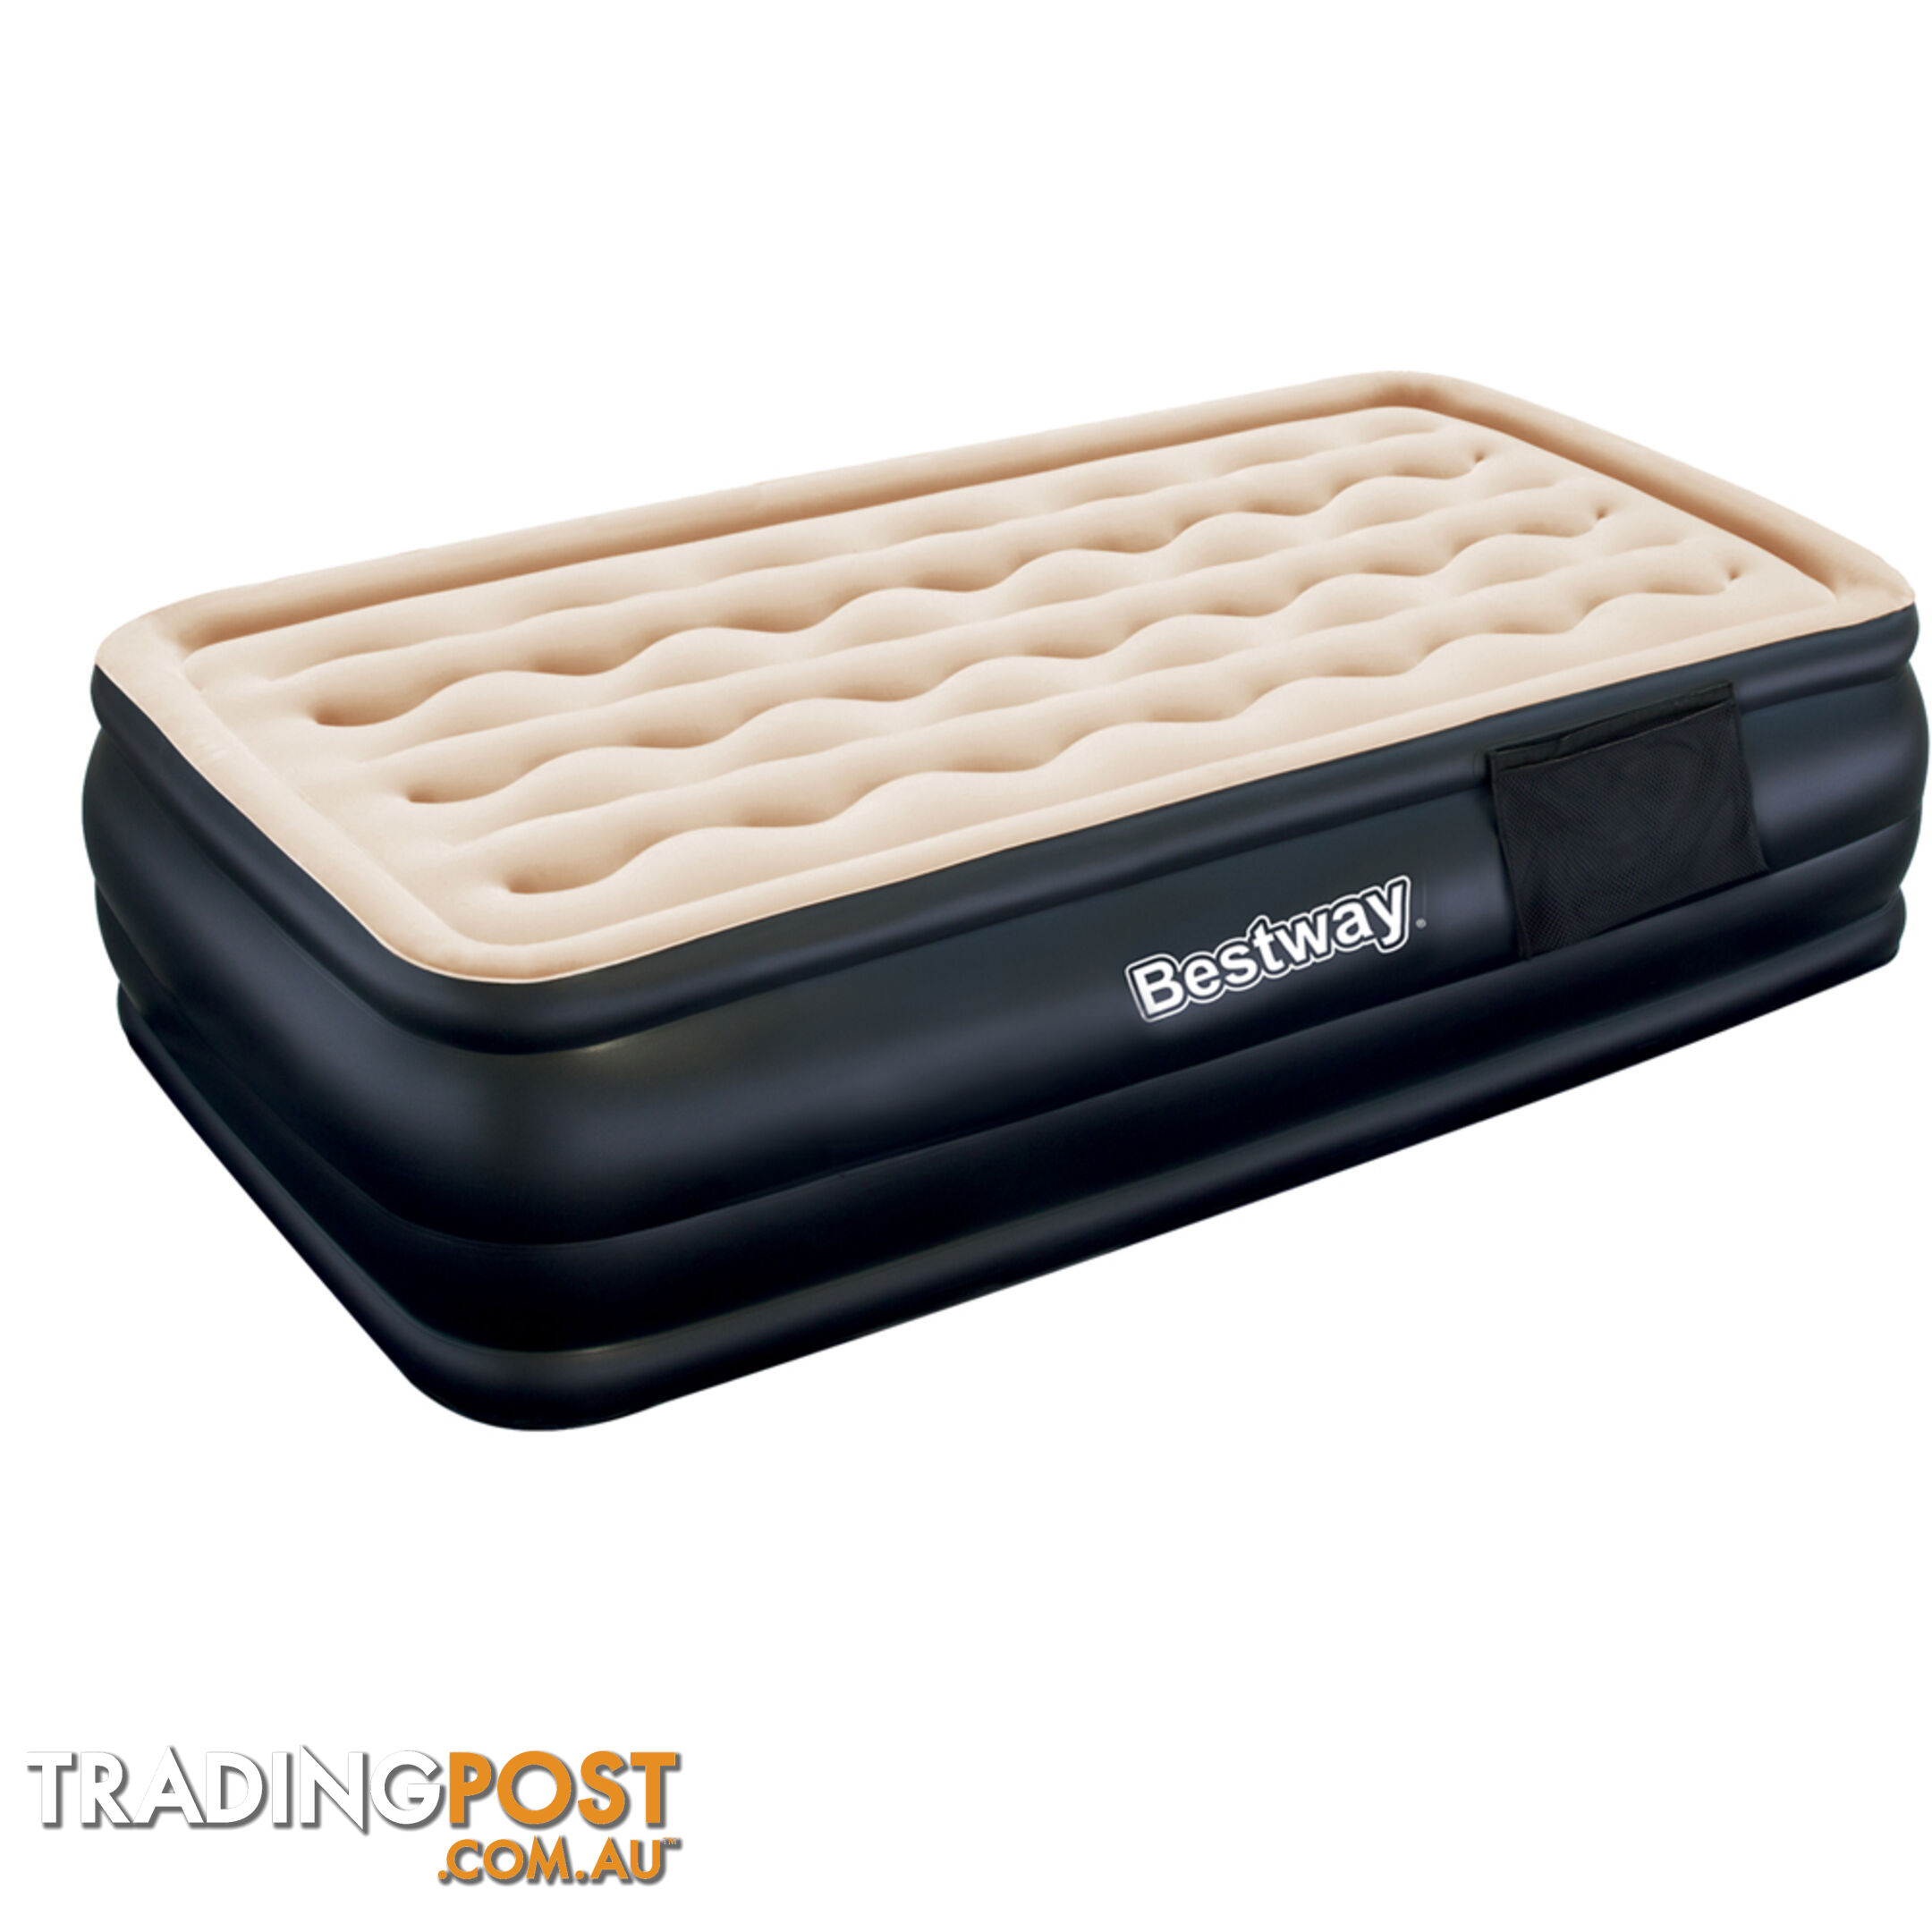 Bestway Single Inflatable Air Mattress Bed w/ Built-in Pump Black